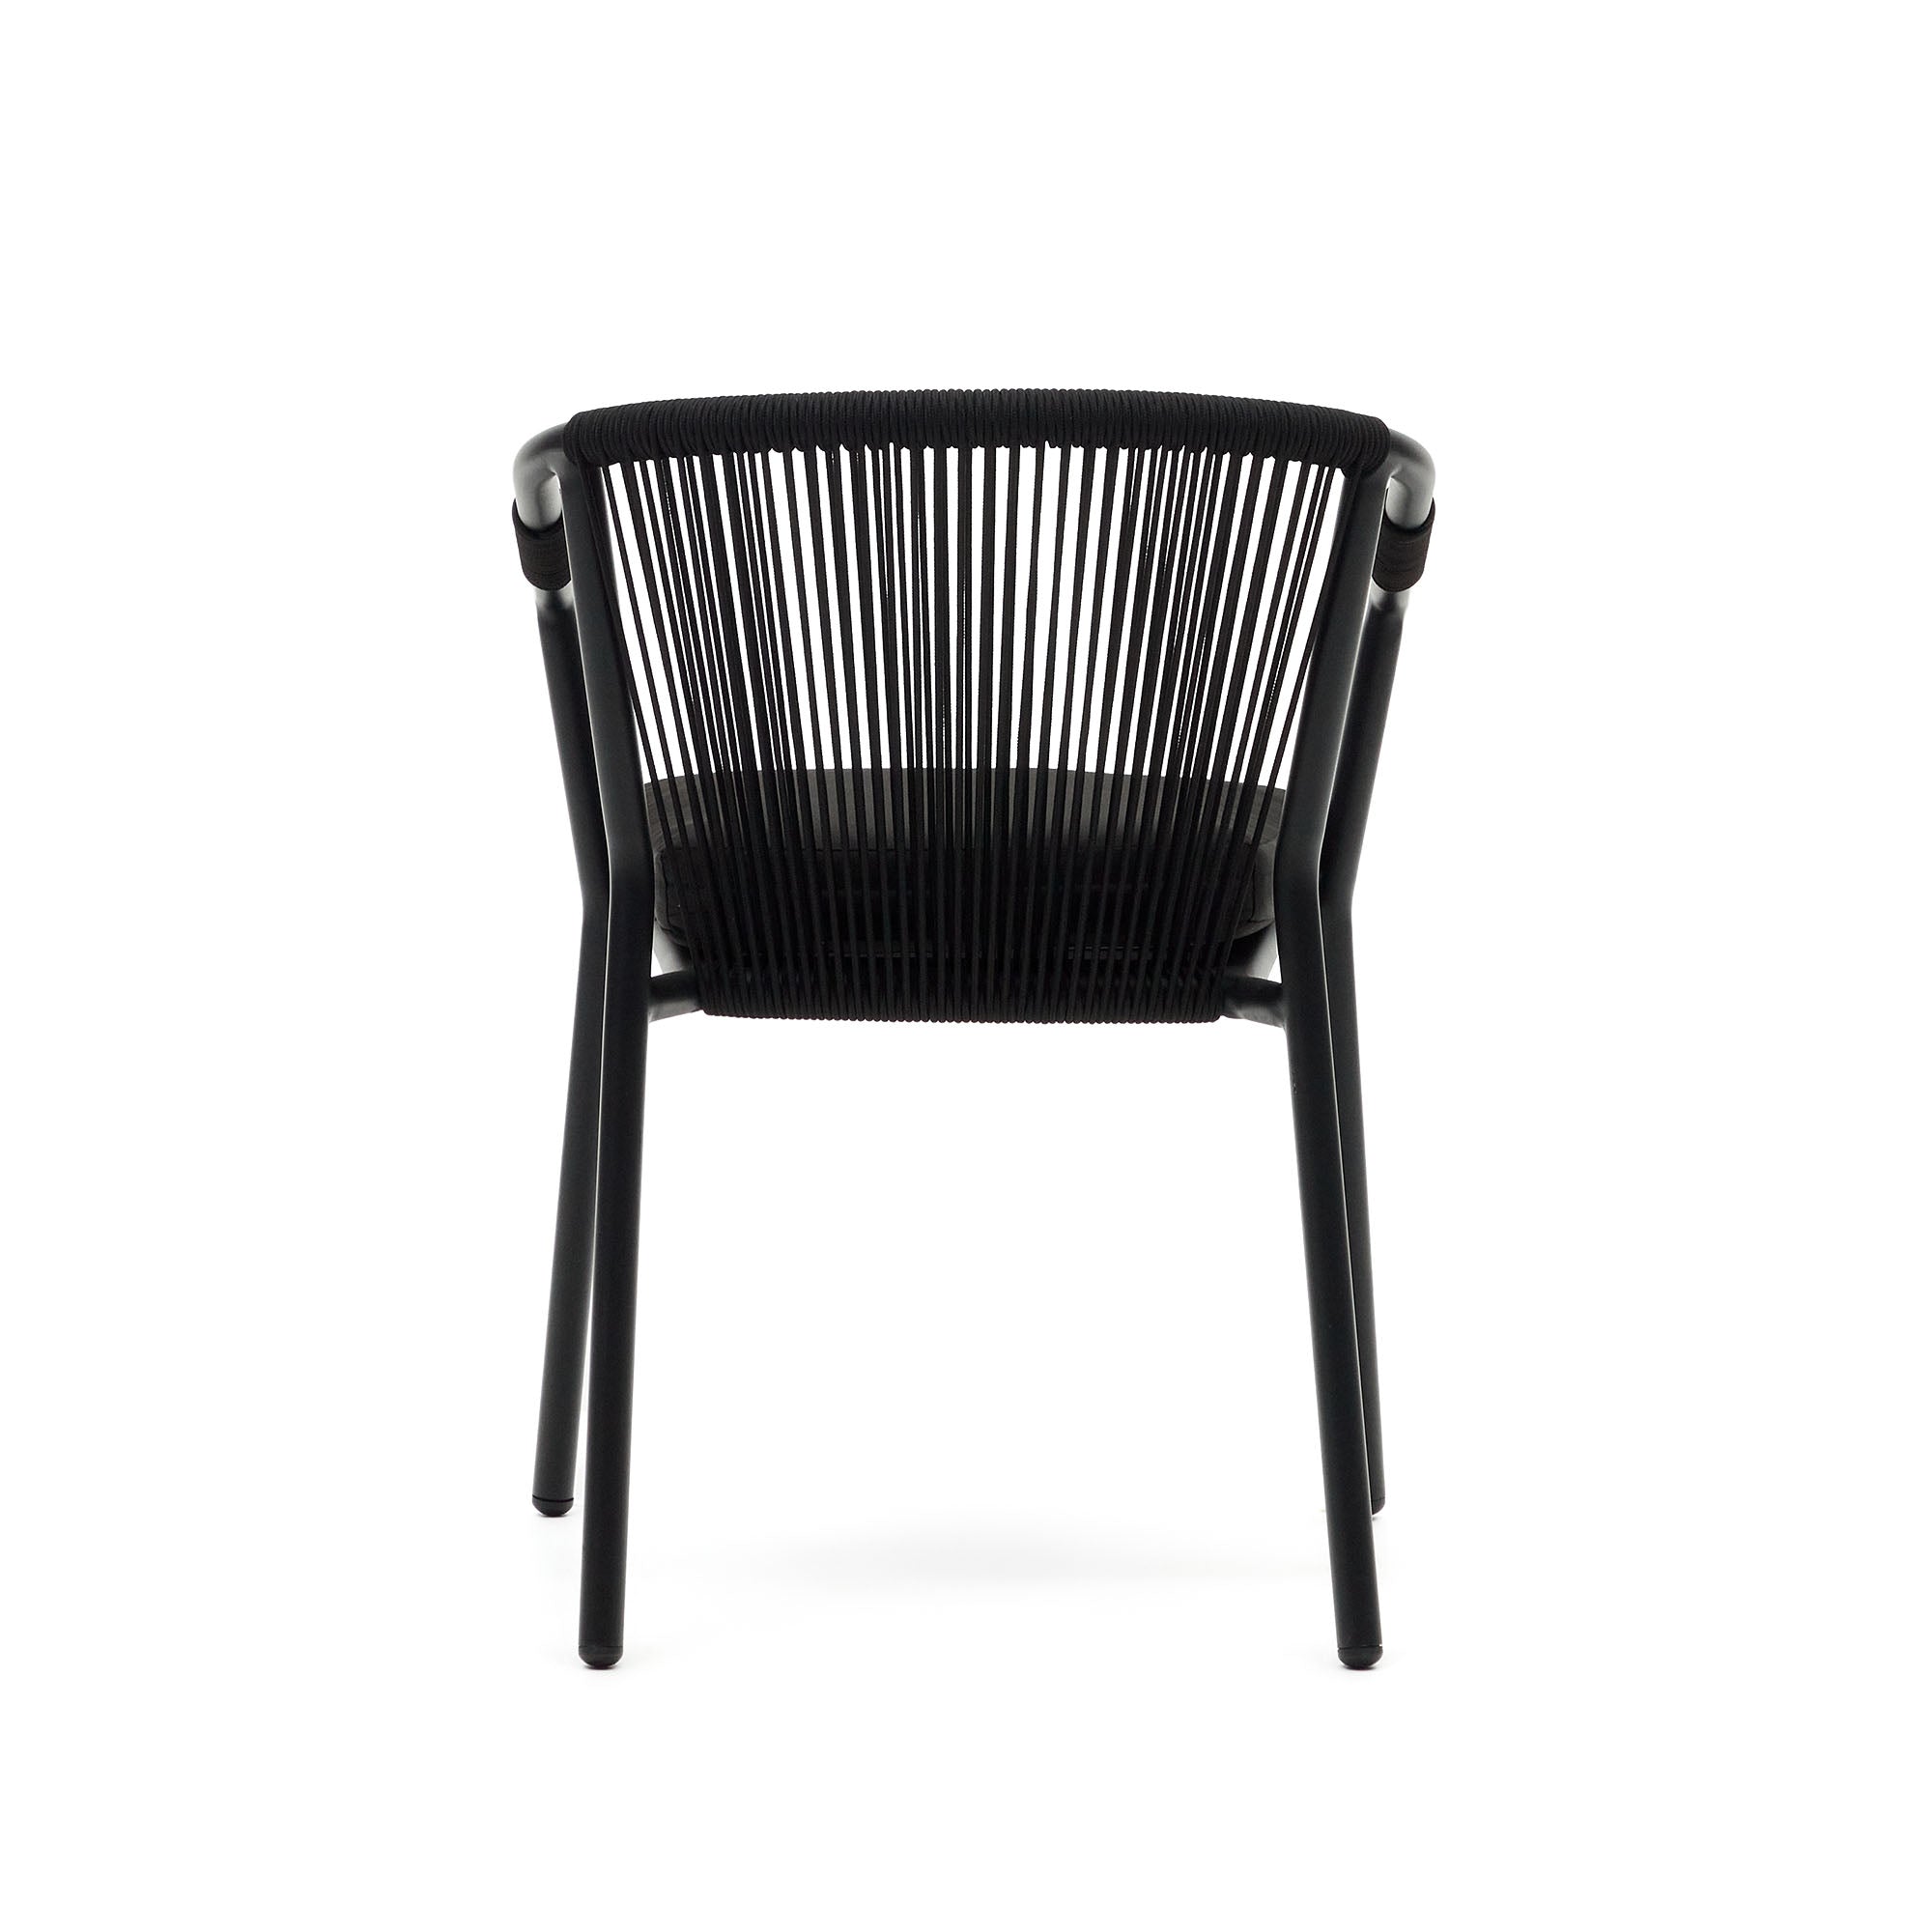 Xelida stackable garden chair in aluminium and black cord